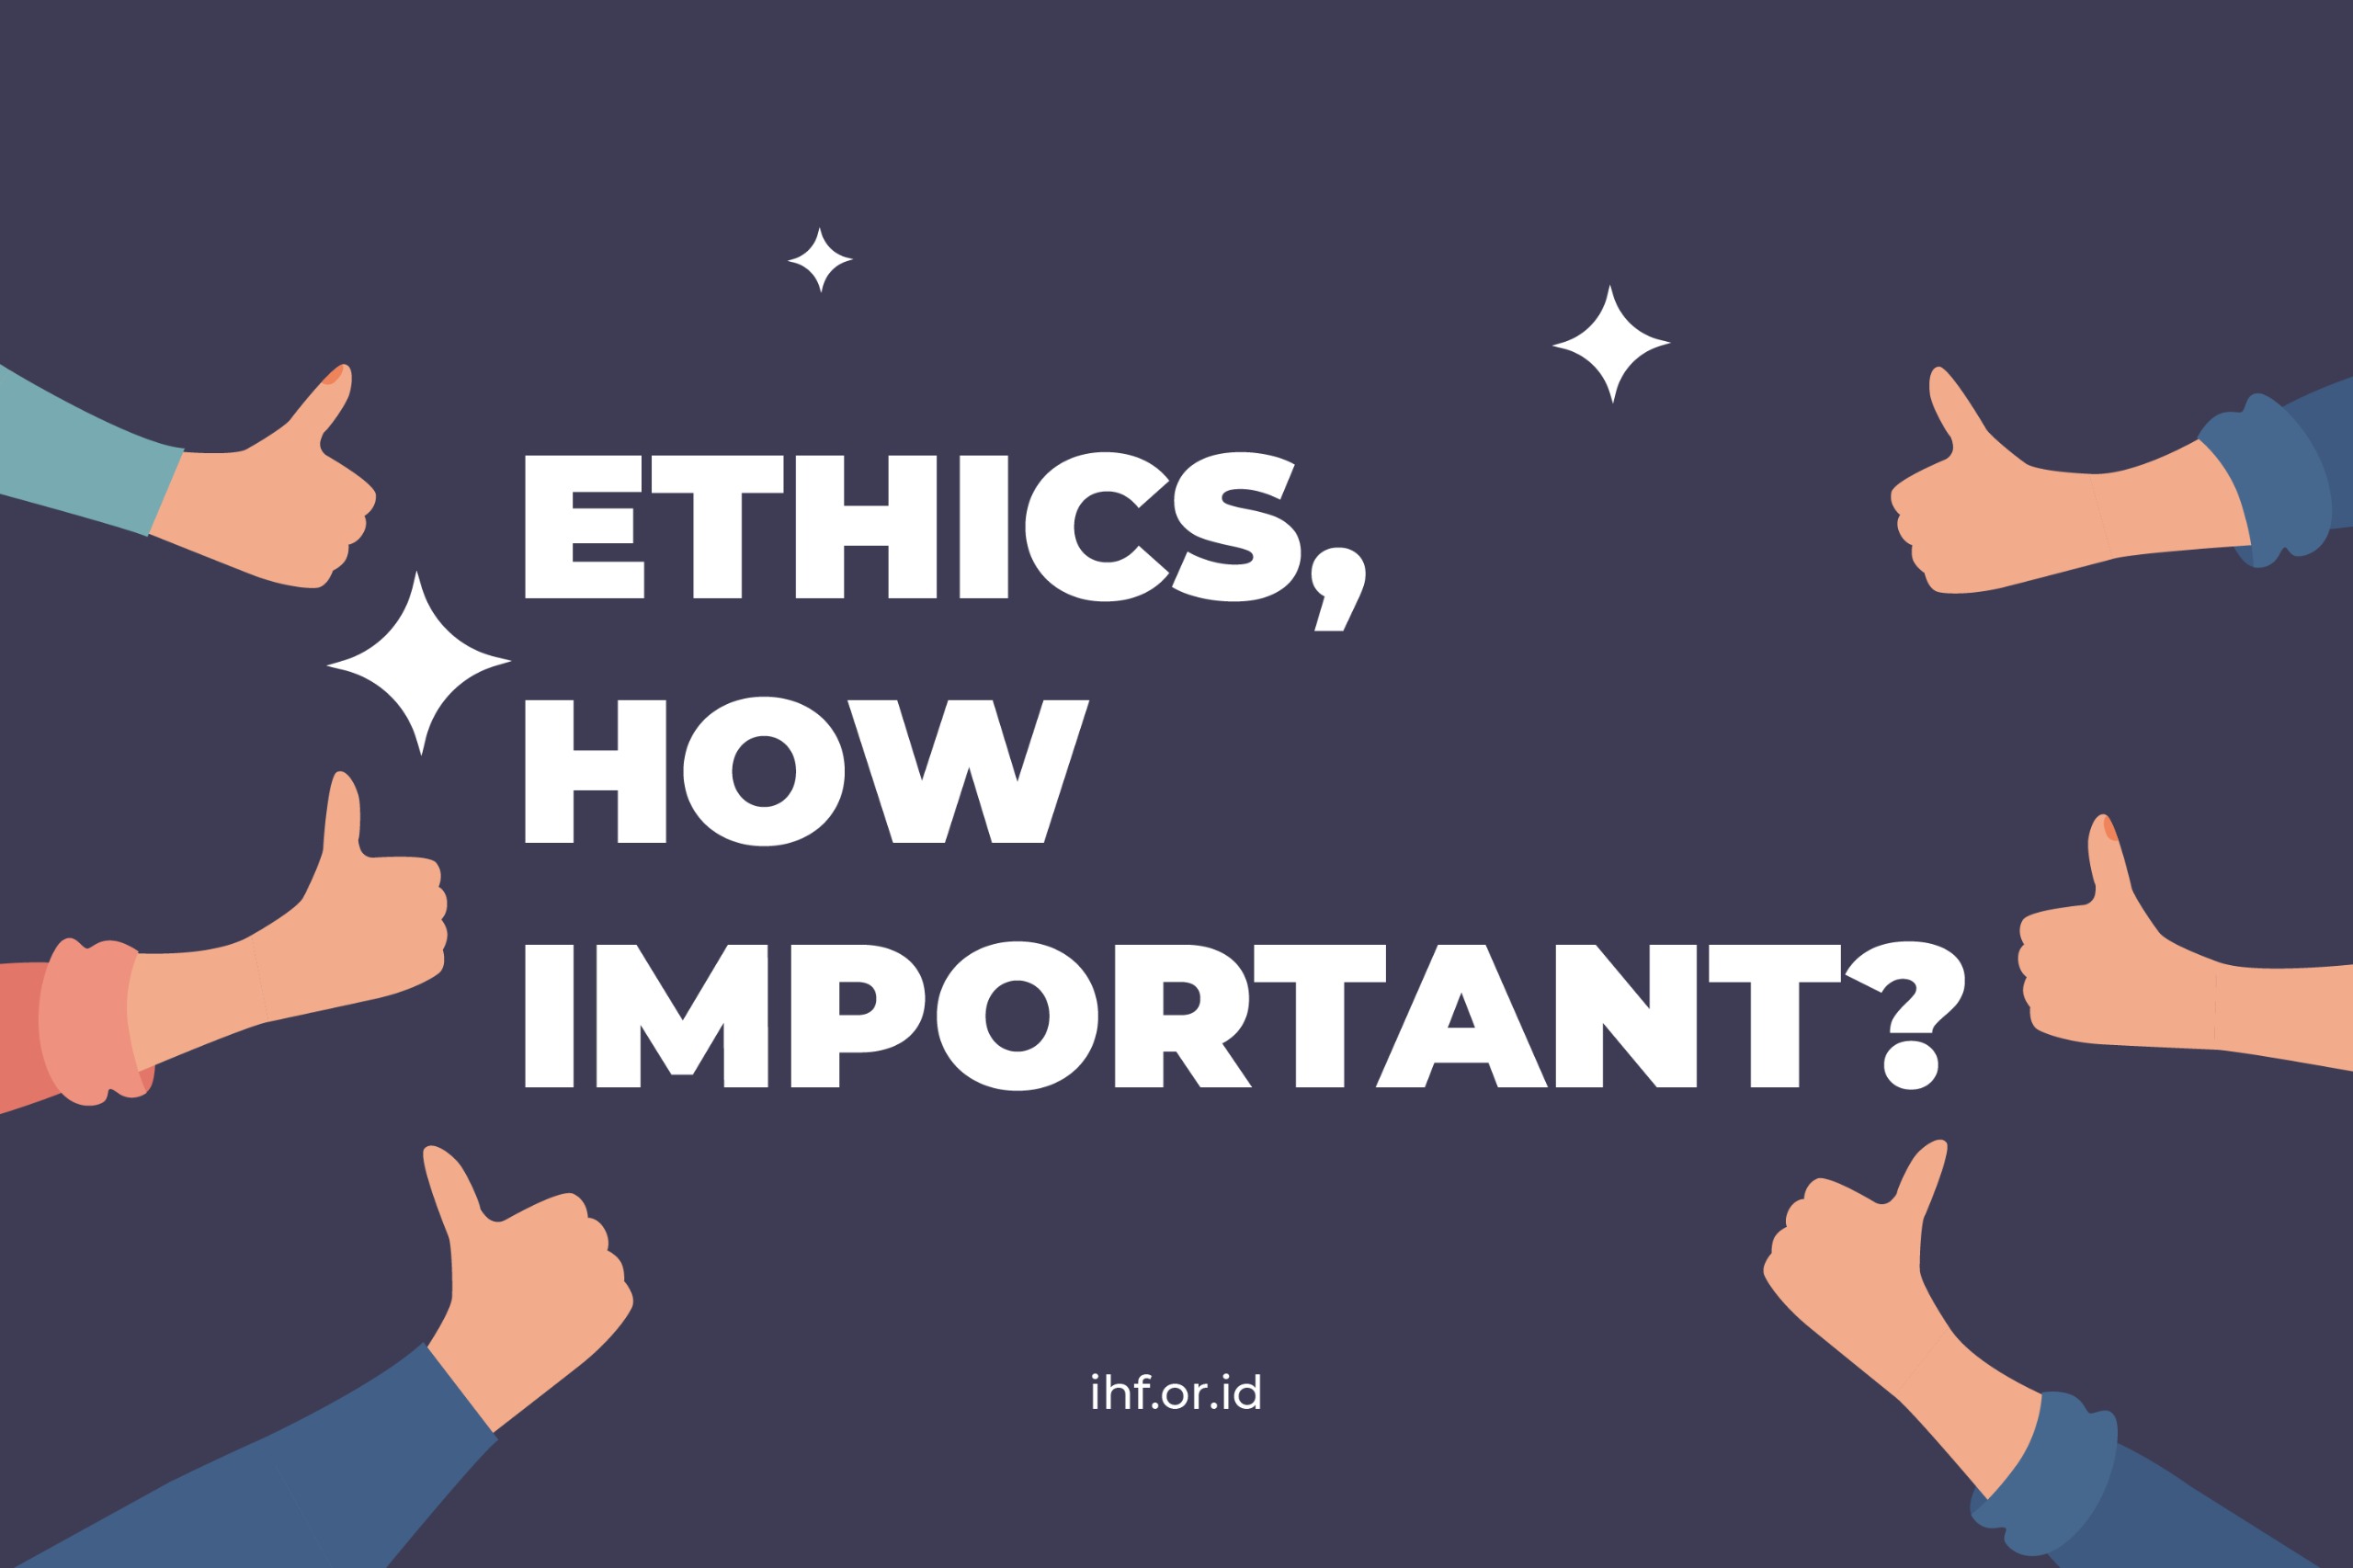 Ethics, How Important?